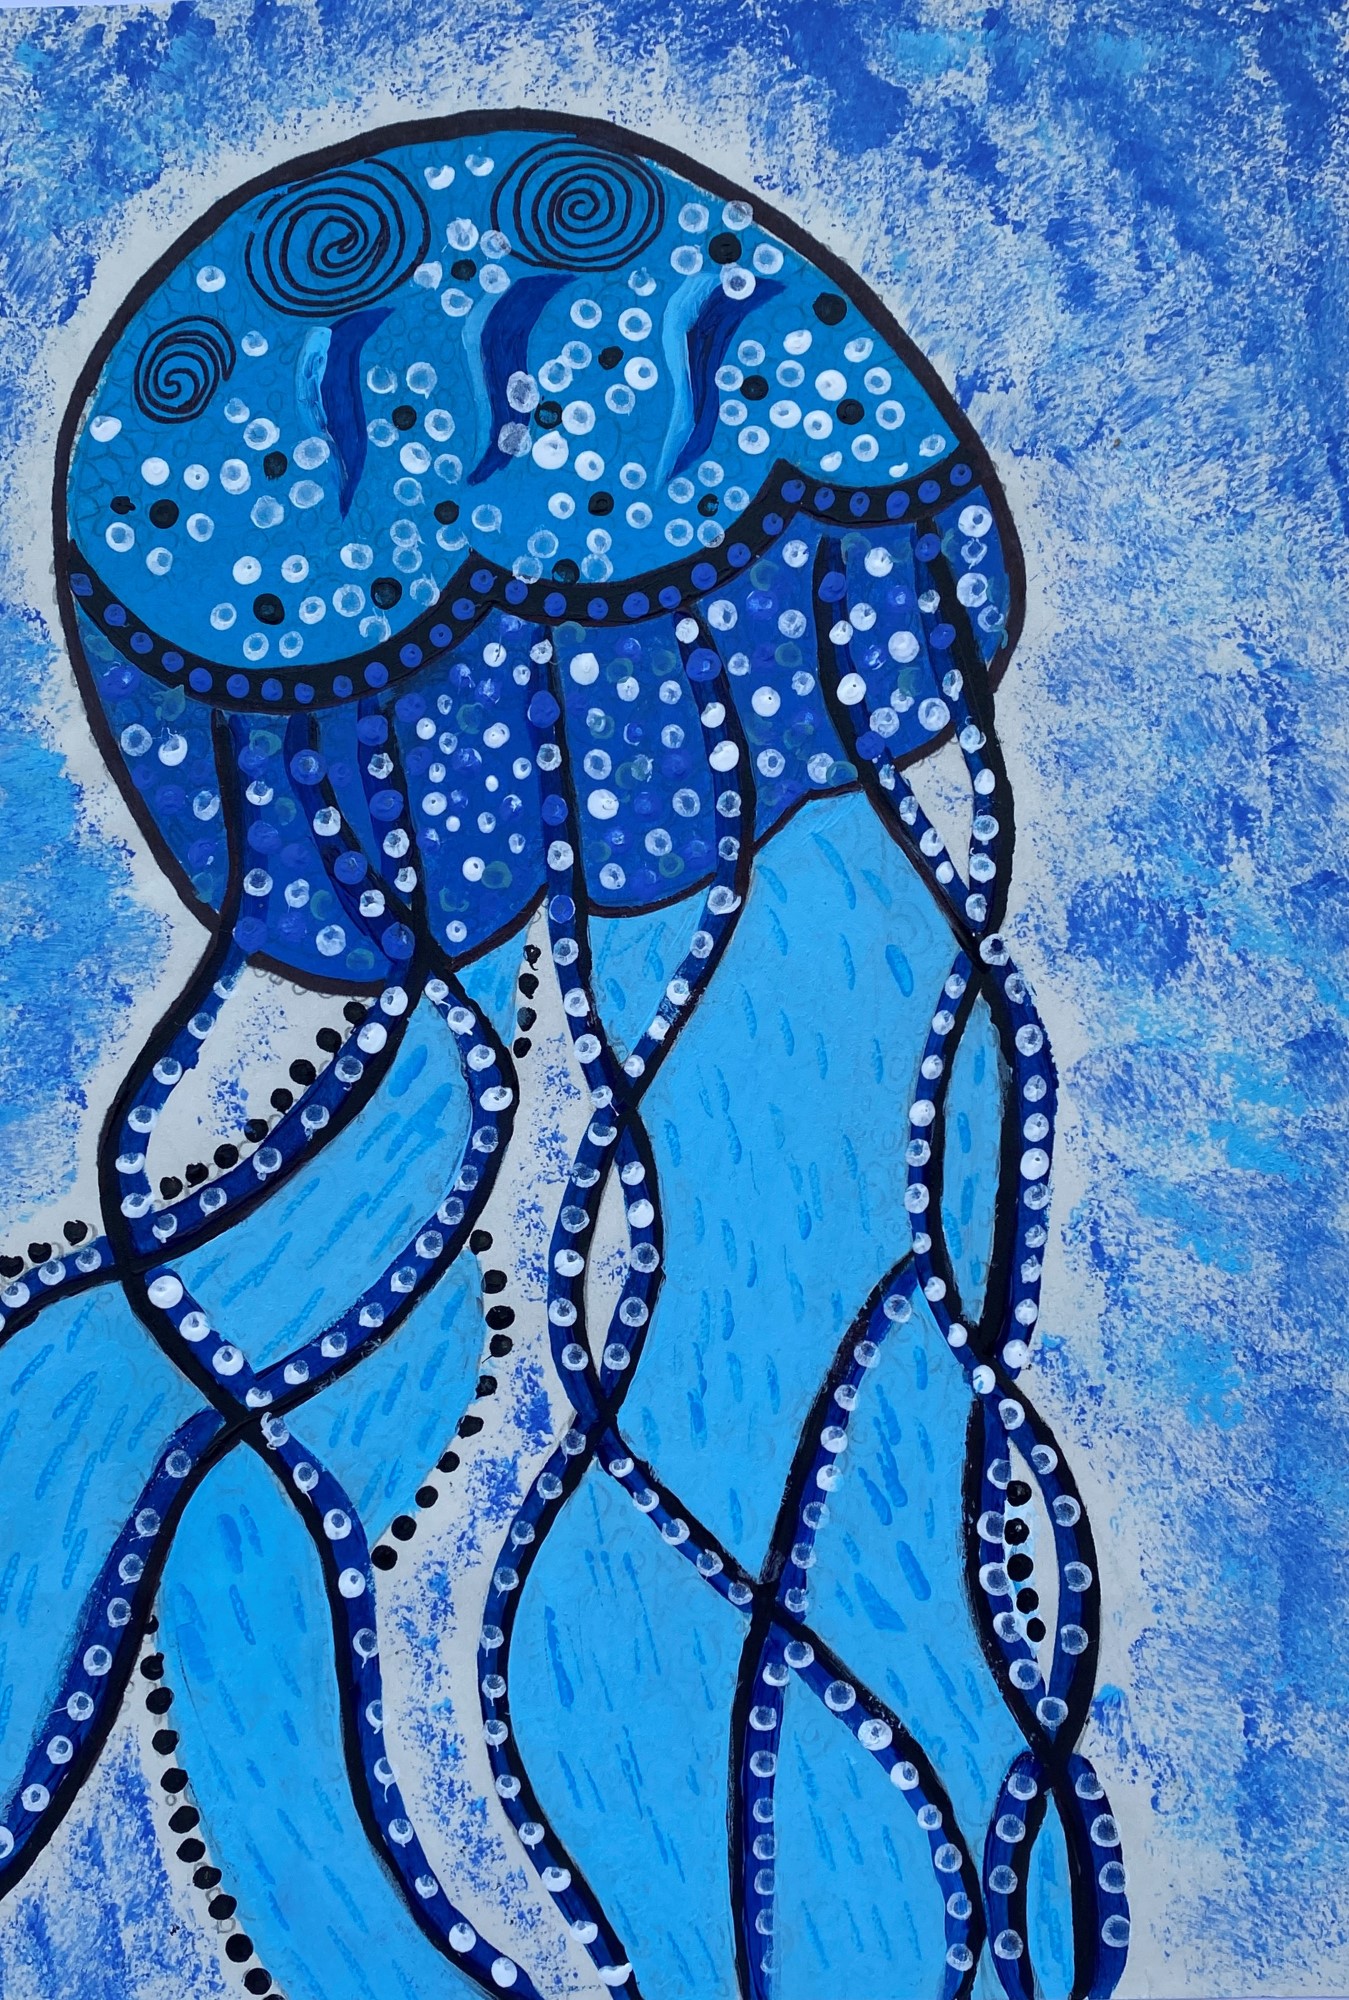 student artwork - octopus